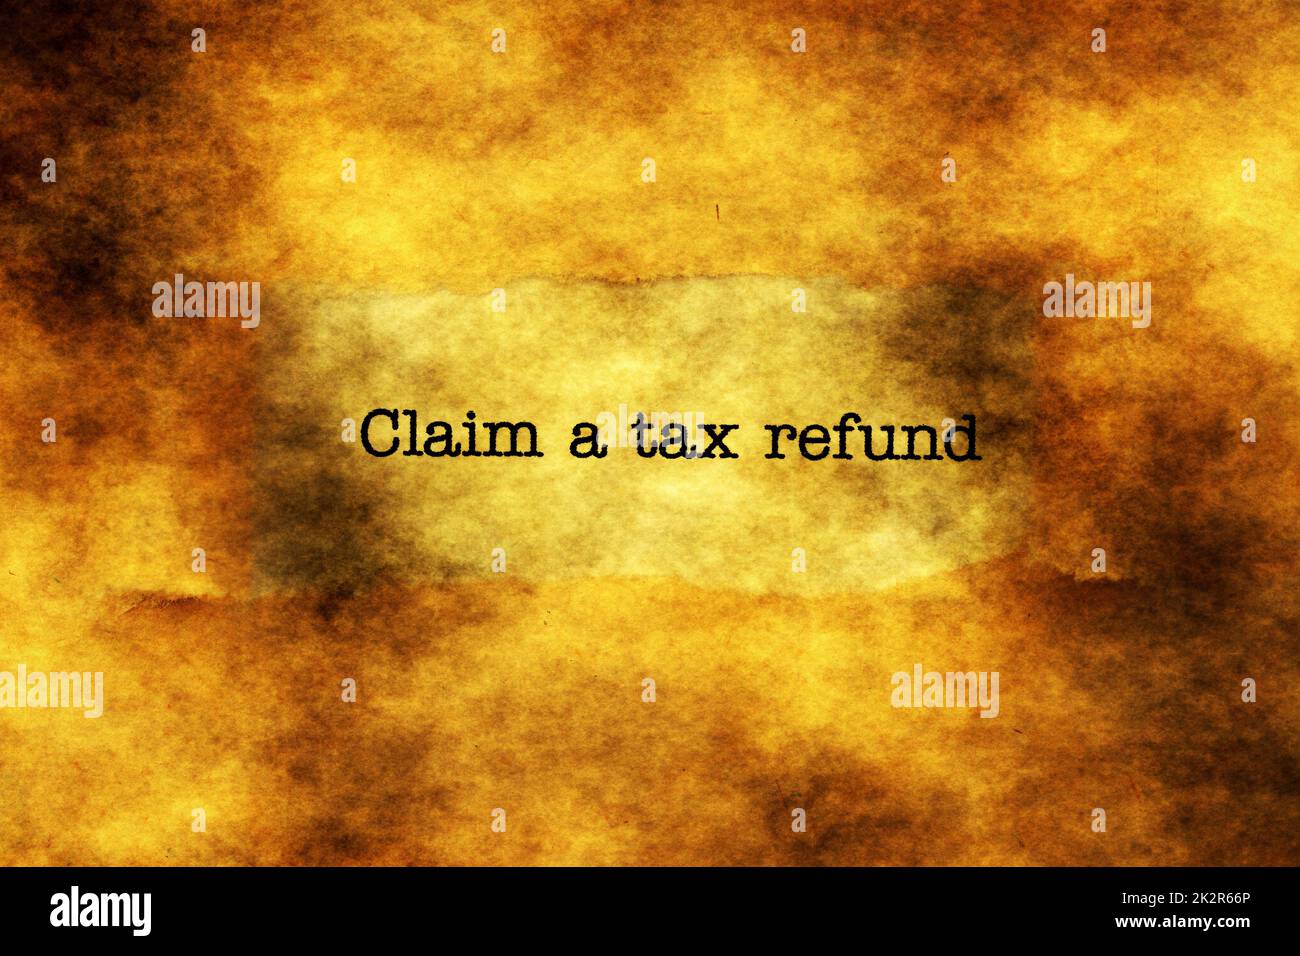 Claim tax refund grunge concept Stock Photo